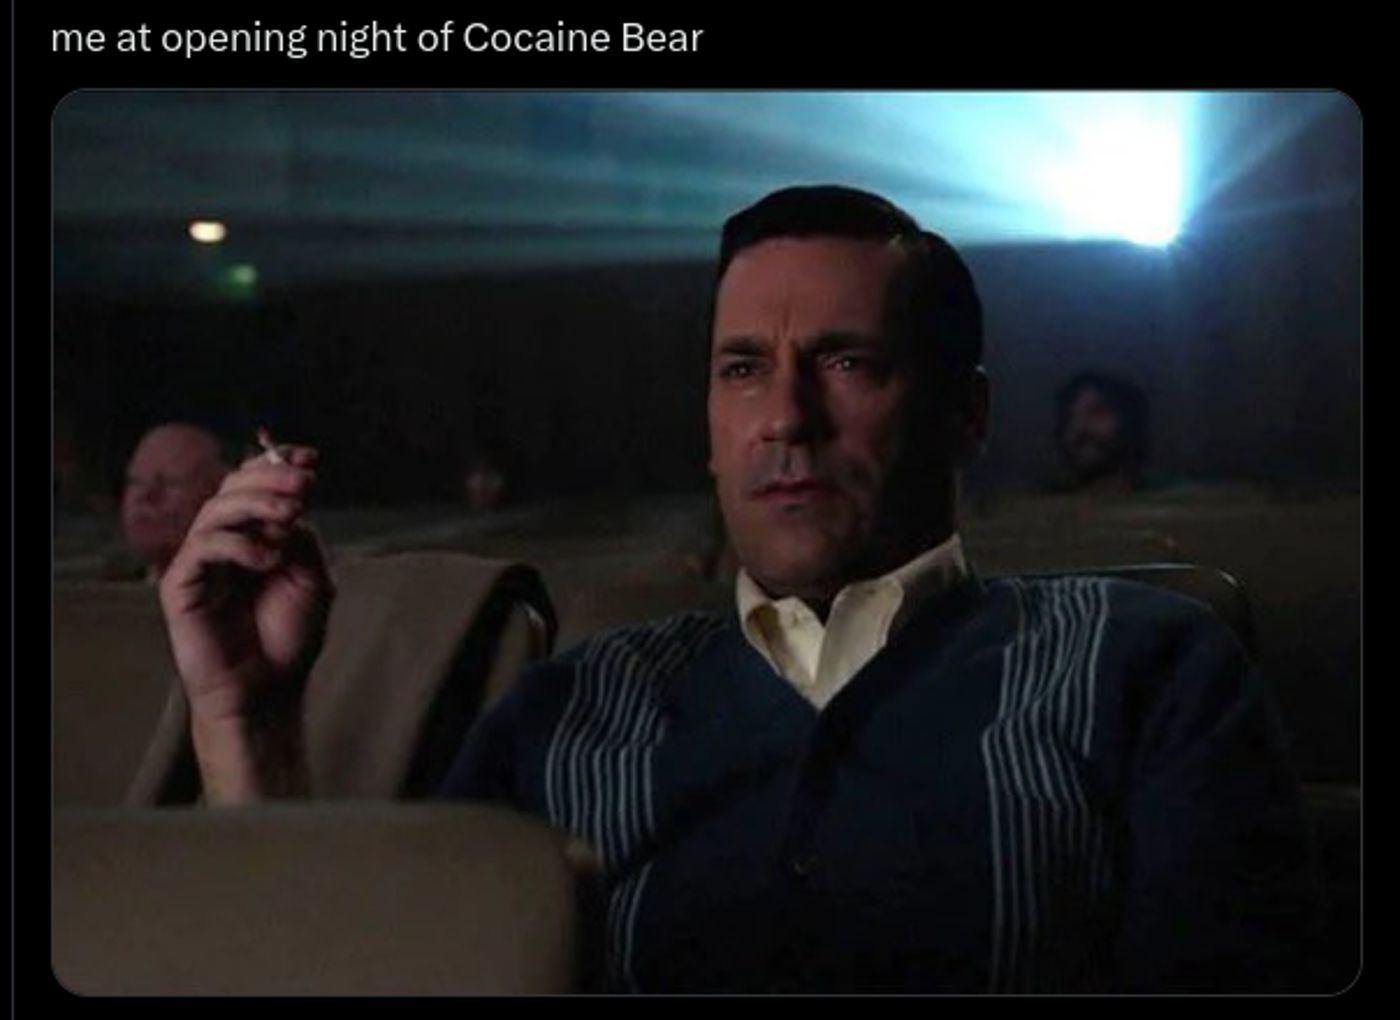 Cocaine Bear Twitter meme starring Jon Hamm in the movie